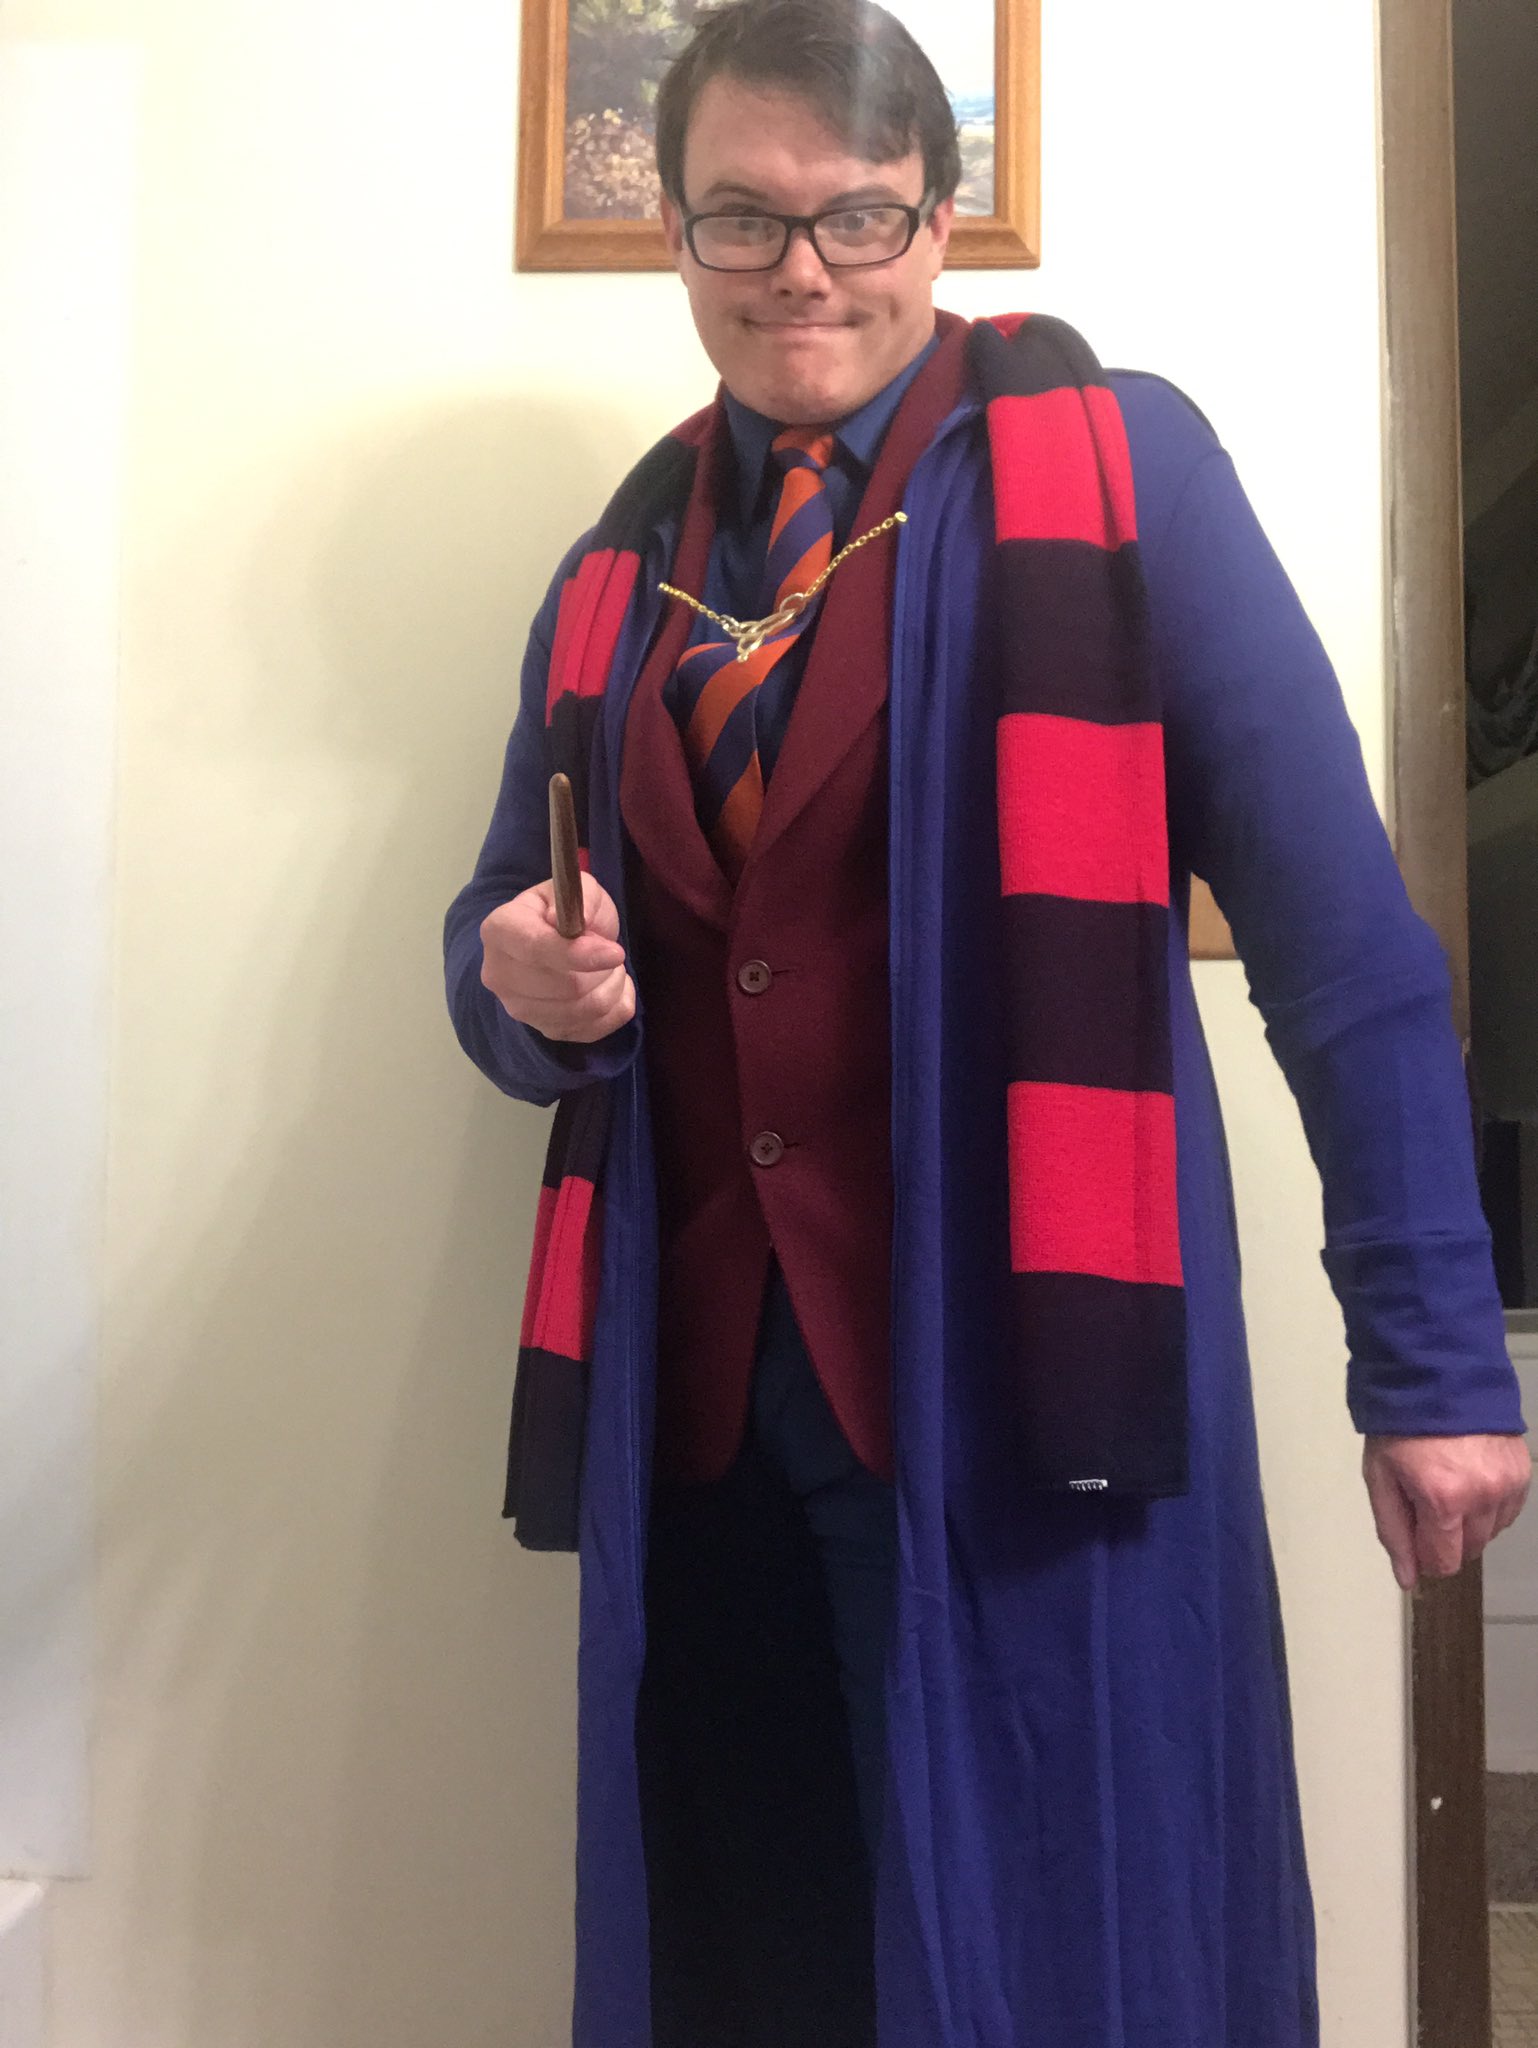 Jordan Eshelman is ready for the Holidays on Twitter: "#Ilvermorny uniform  is almost complete! #wizardingworld #WizardsUnite #HarryPotter #Wizard  #cosplay https://t.co/KRvikuSDrW" / Twitter